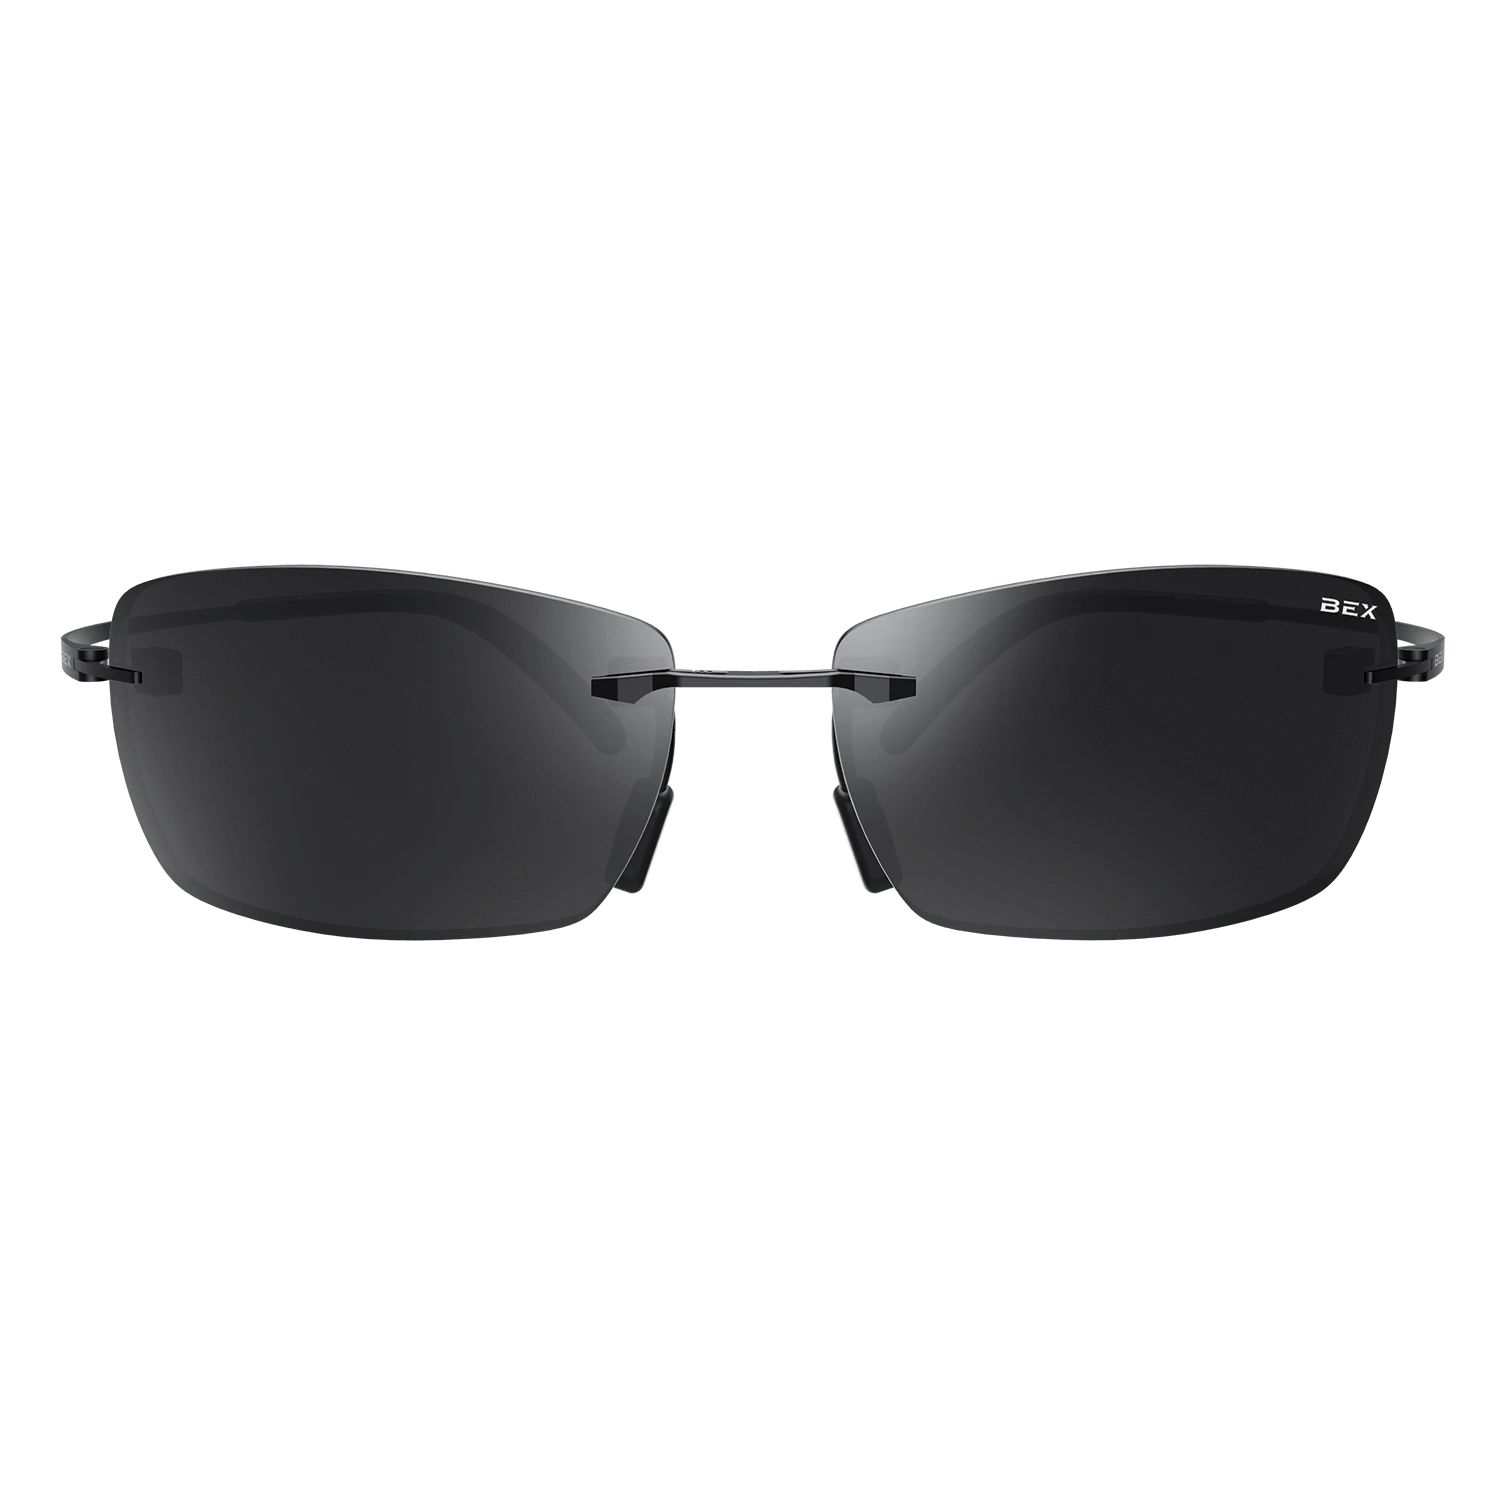 FNNLAND X Black/Gray Sunglasses